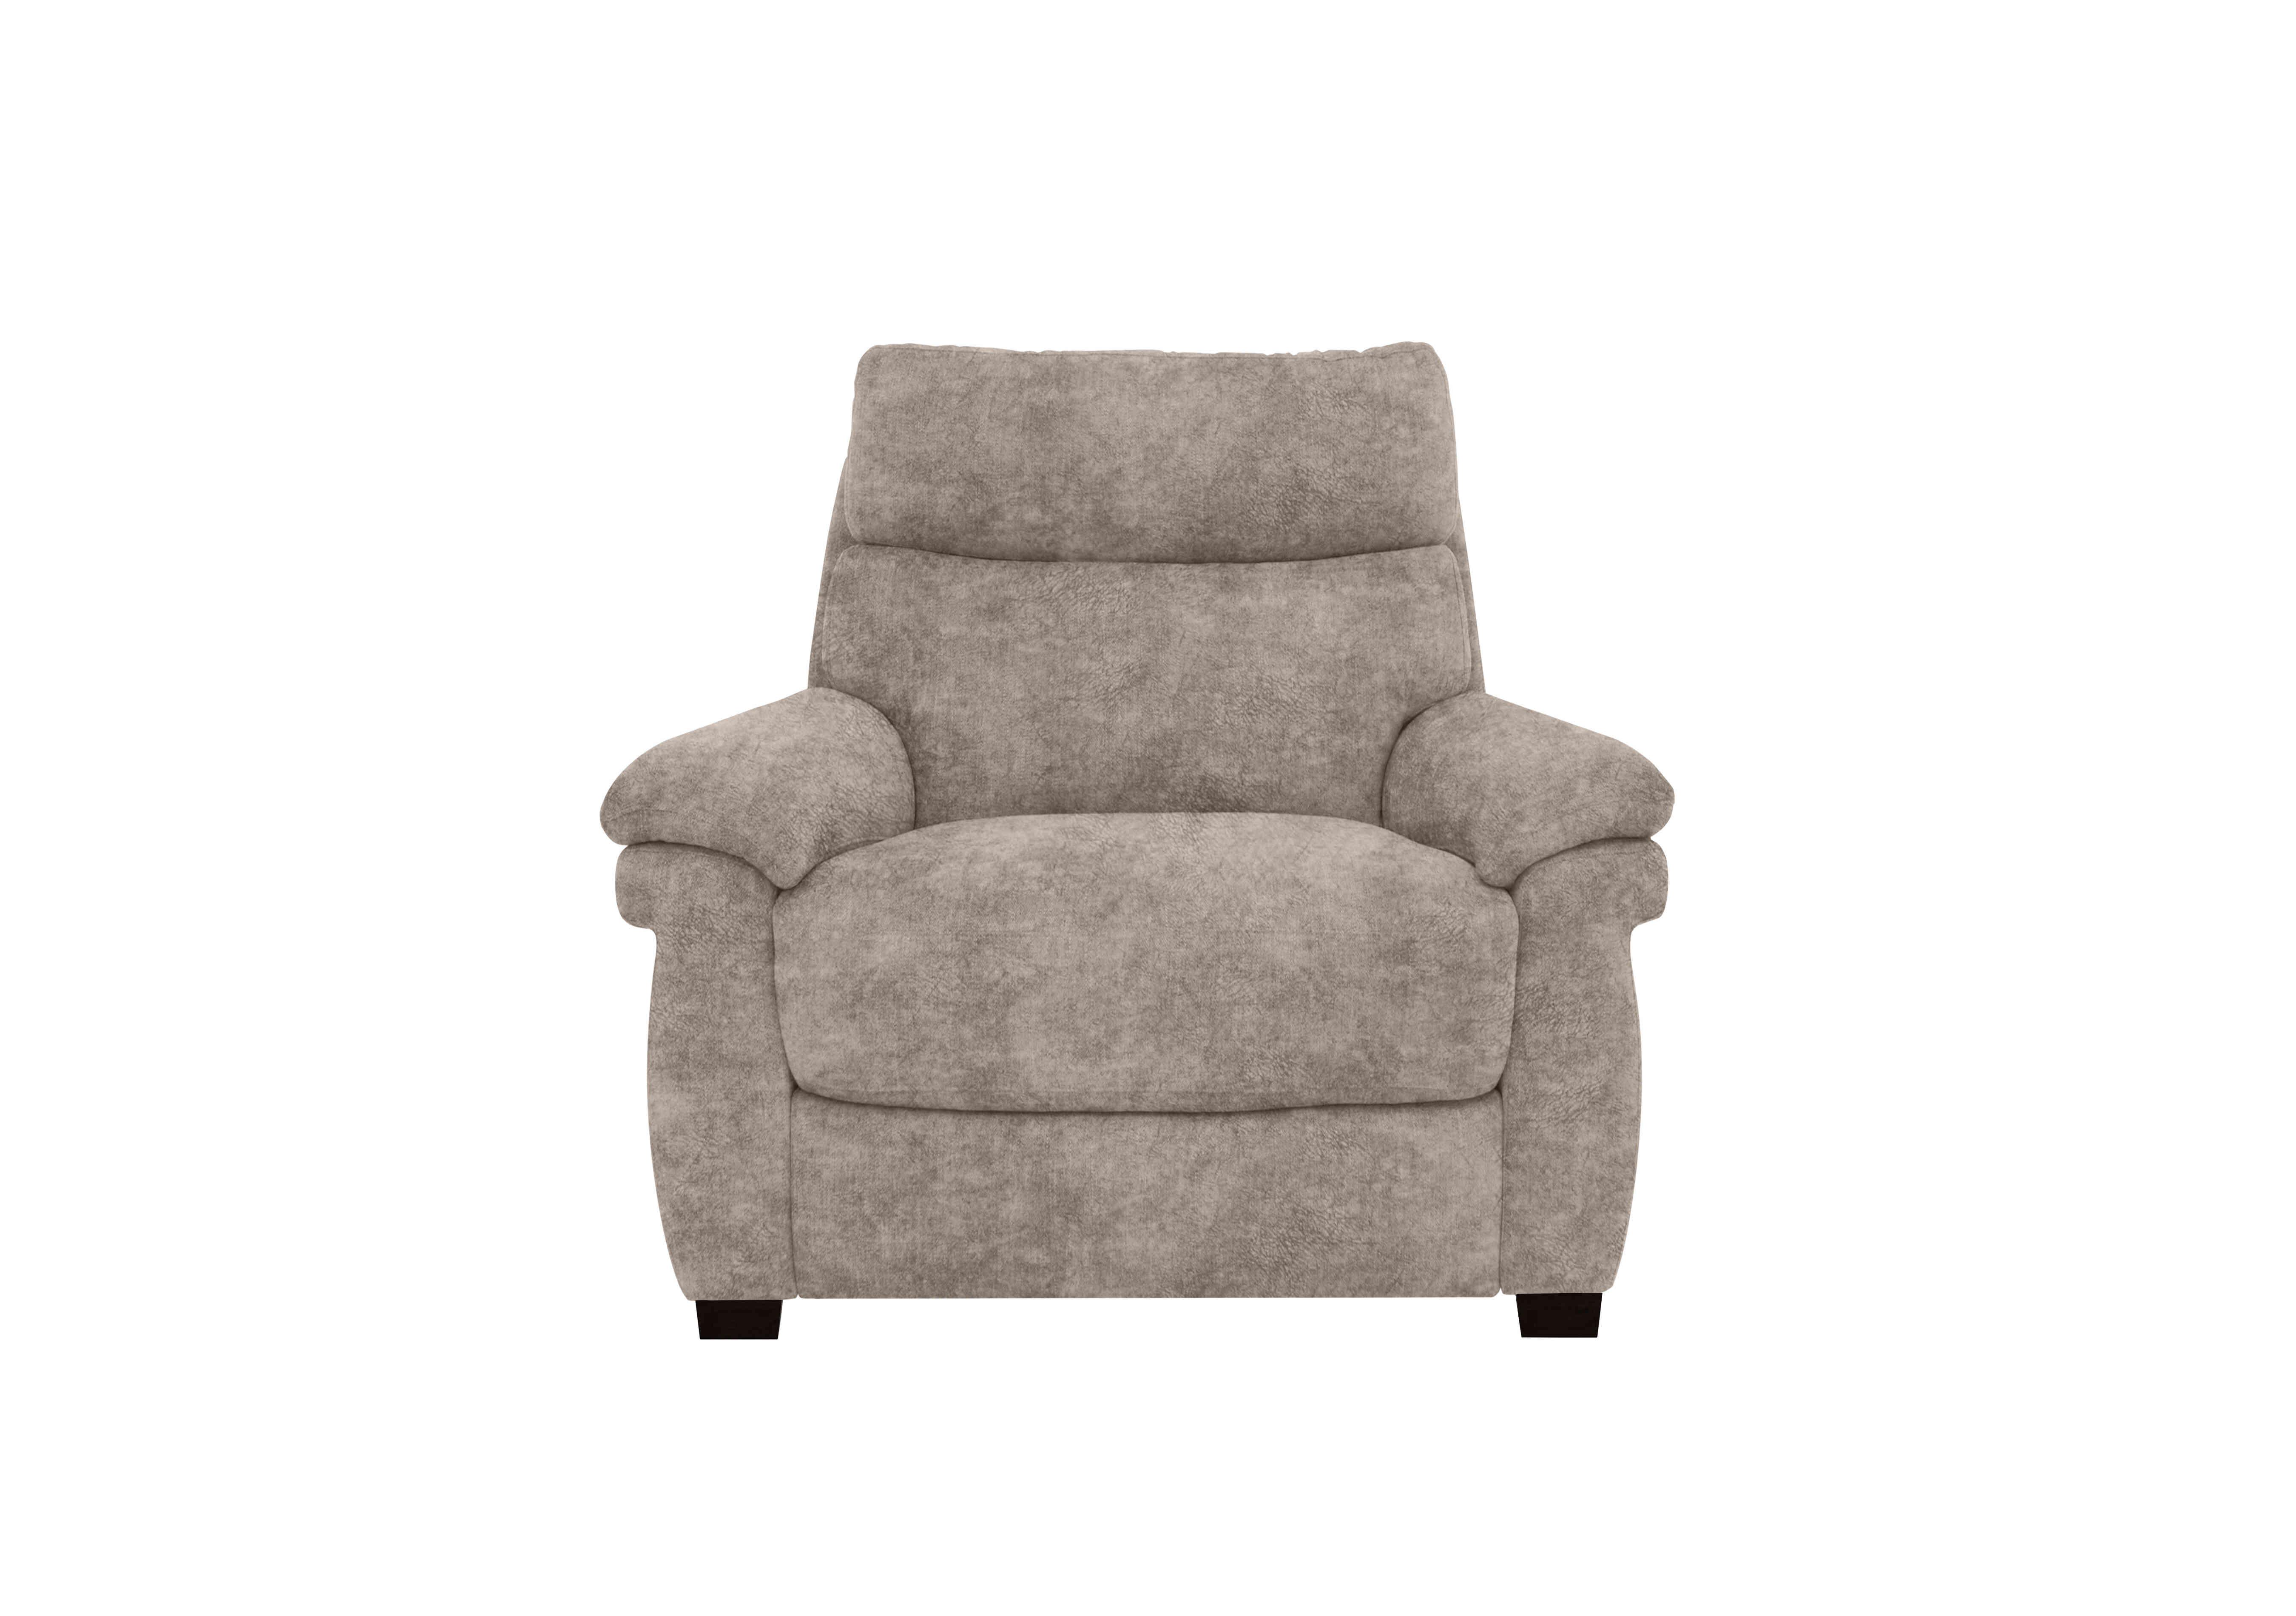 Serene Fabric Chair in Bfa-Bnn-R29 Mink on Furniture Village